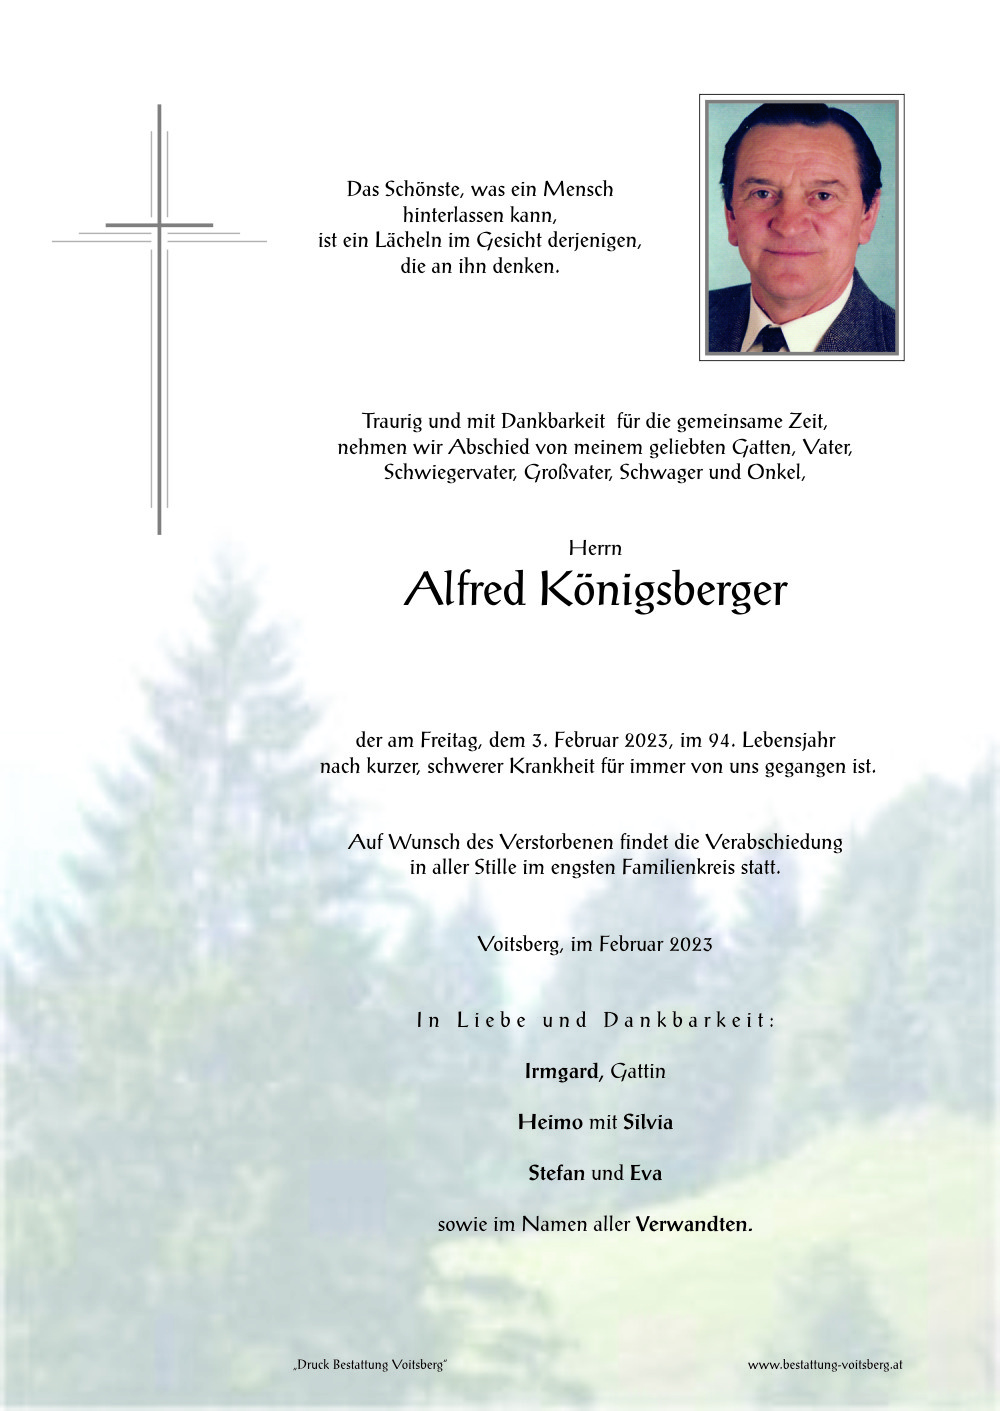 Alfred Königsberger